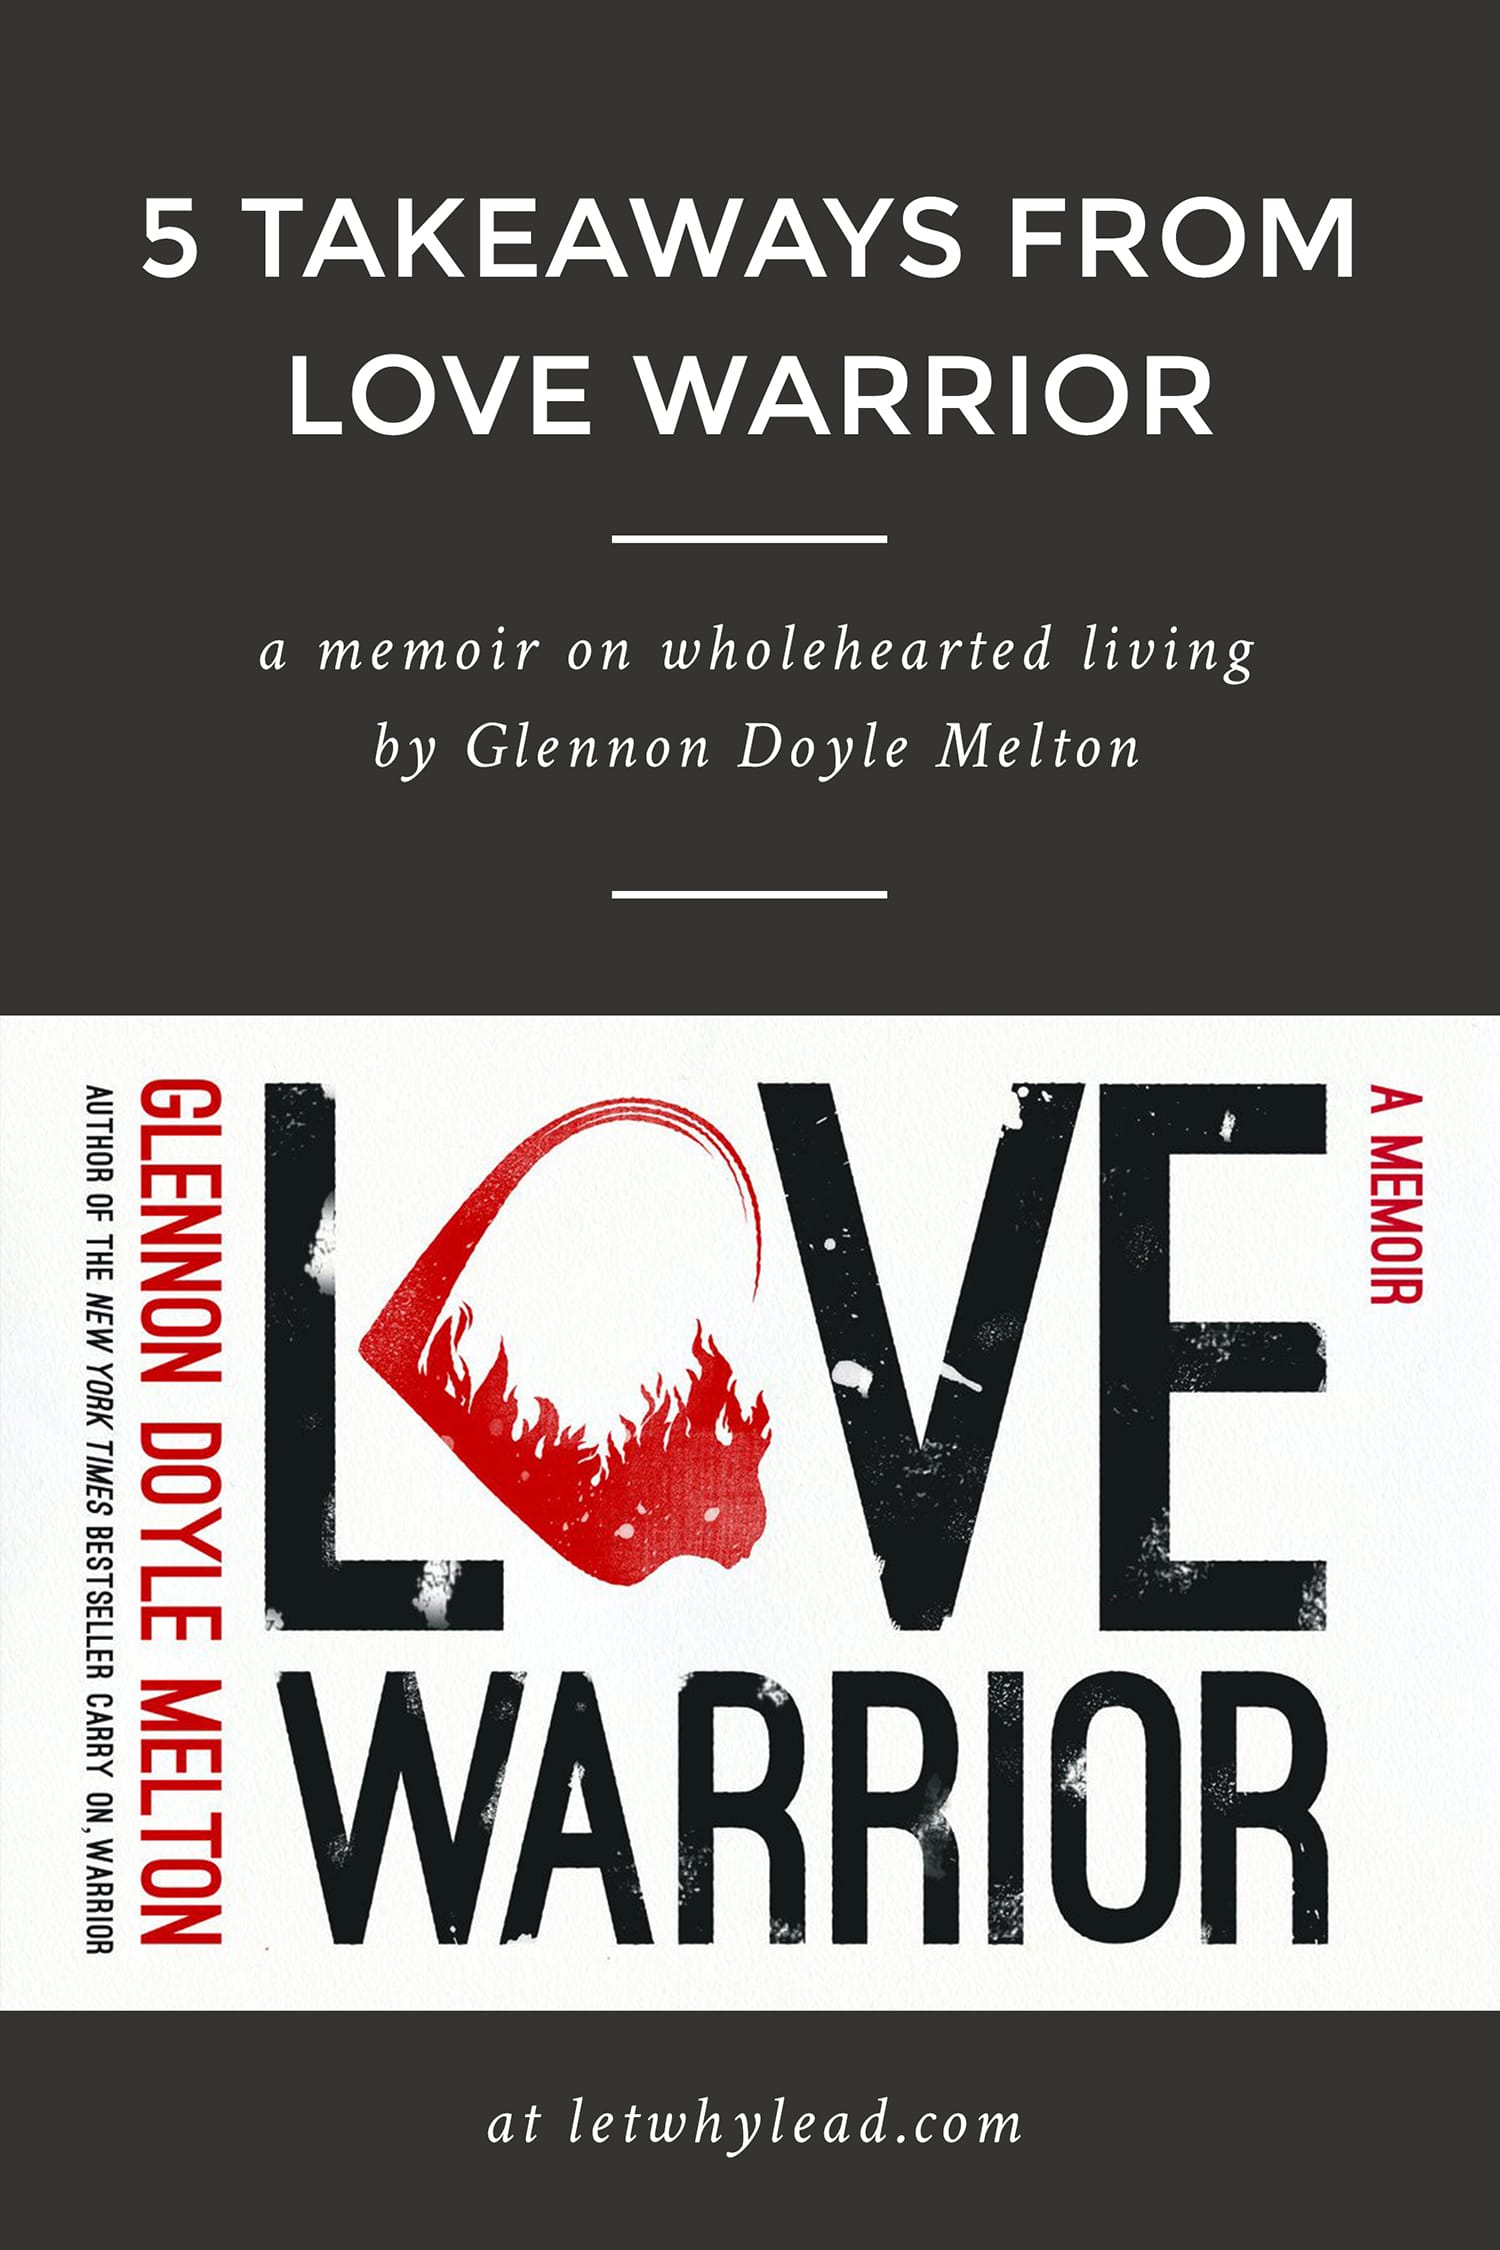 5 beautiful gems from the memoir, Love Warrior by Glennon Doyle Melton.